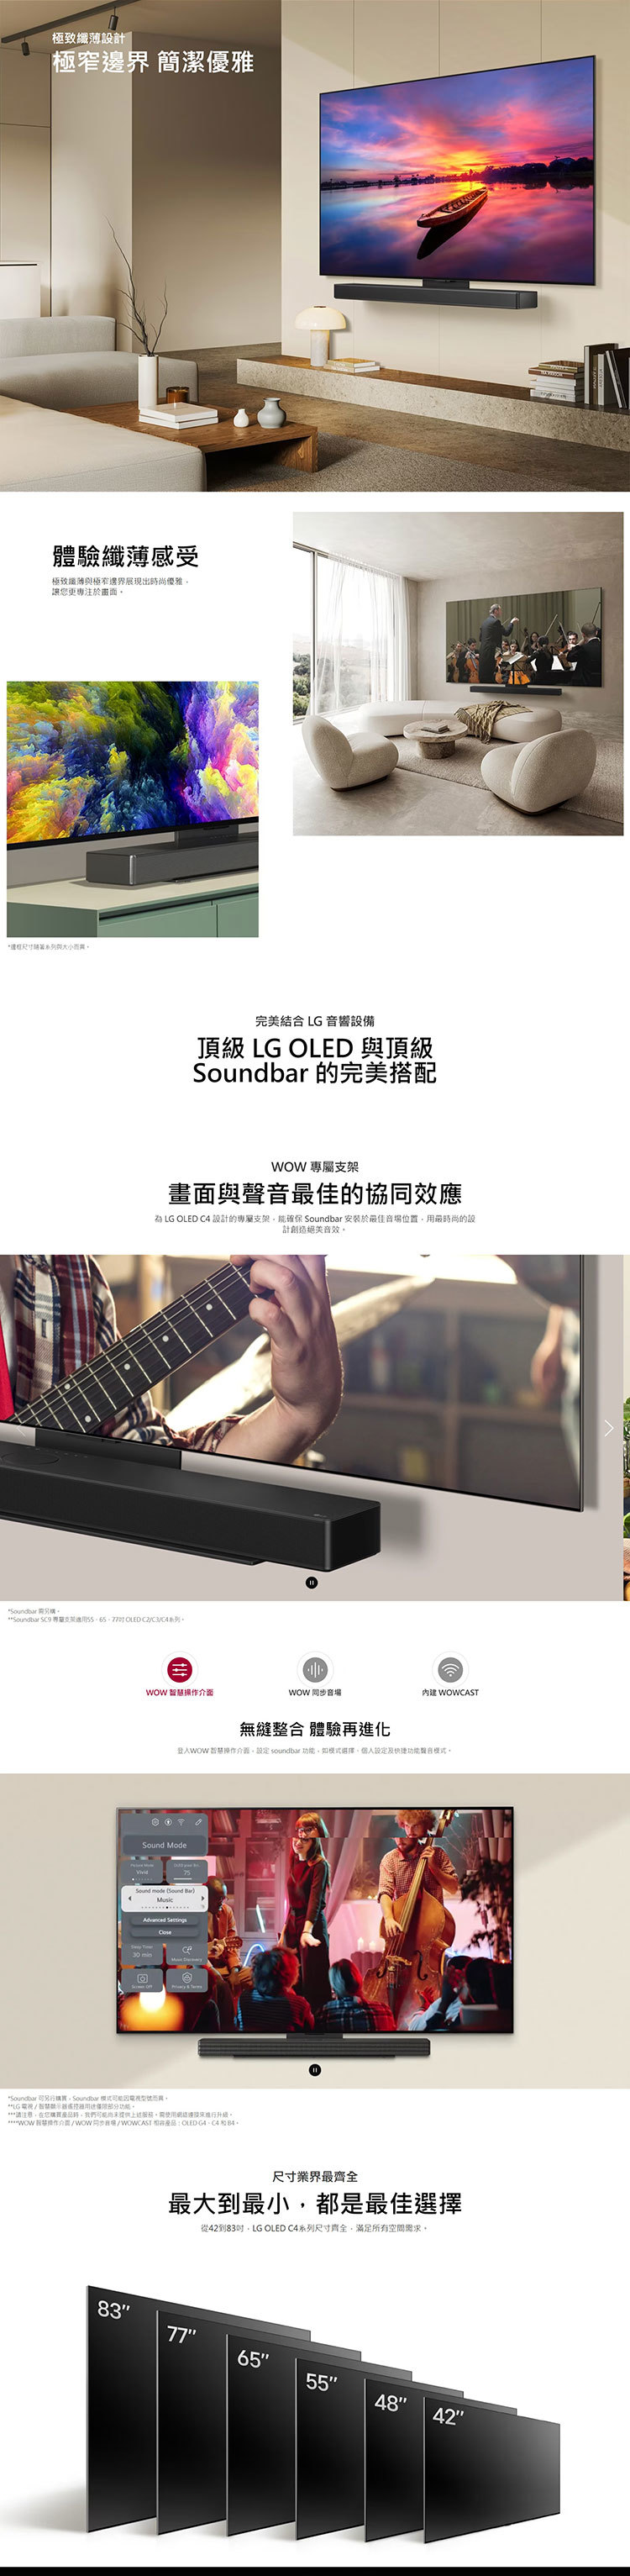 LG OLED55C4PTA 55吋 OLED evo 4K AI 語音物聯網 C4 極緻系列